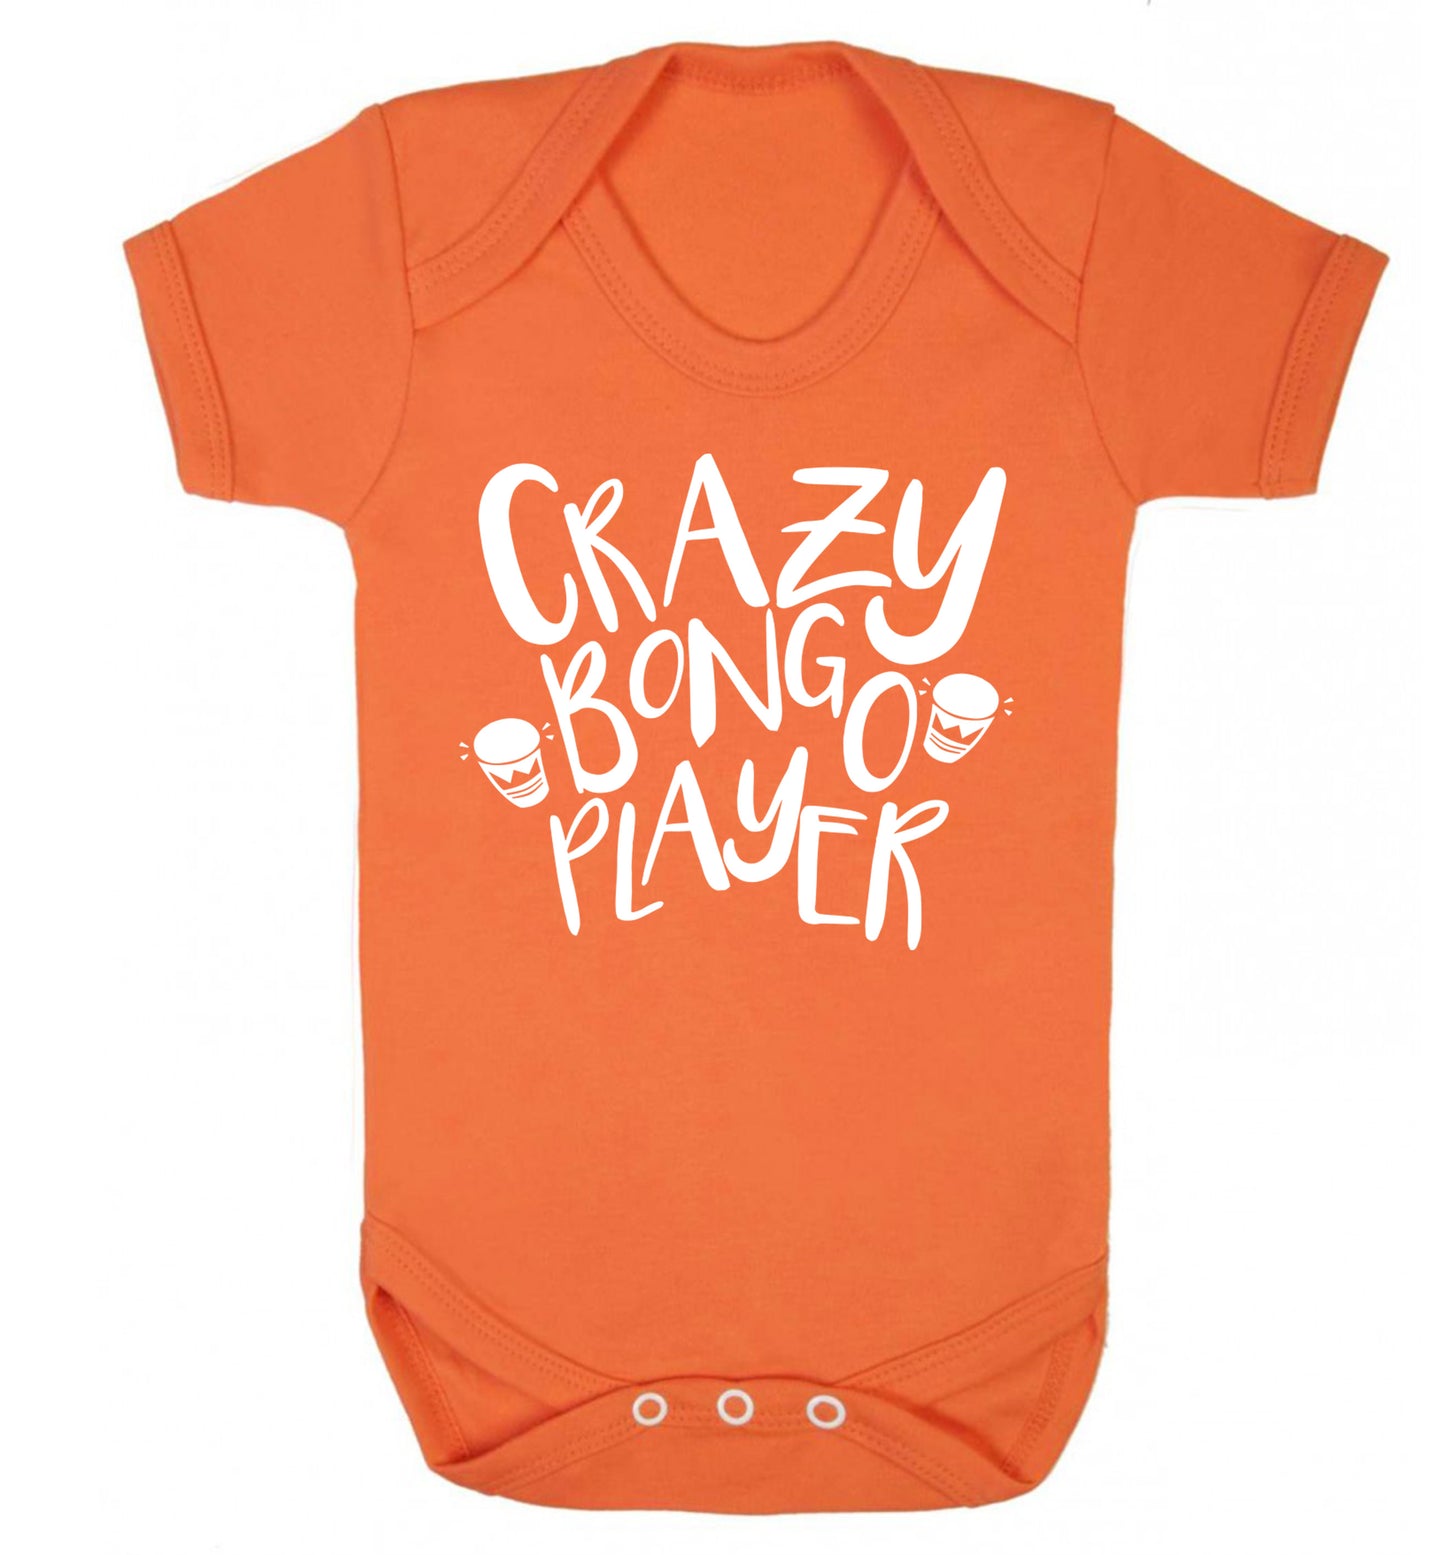 Crazy bongo player Baby Vest orange 18-24 months